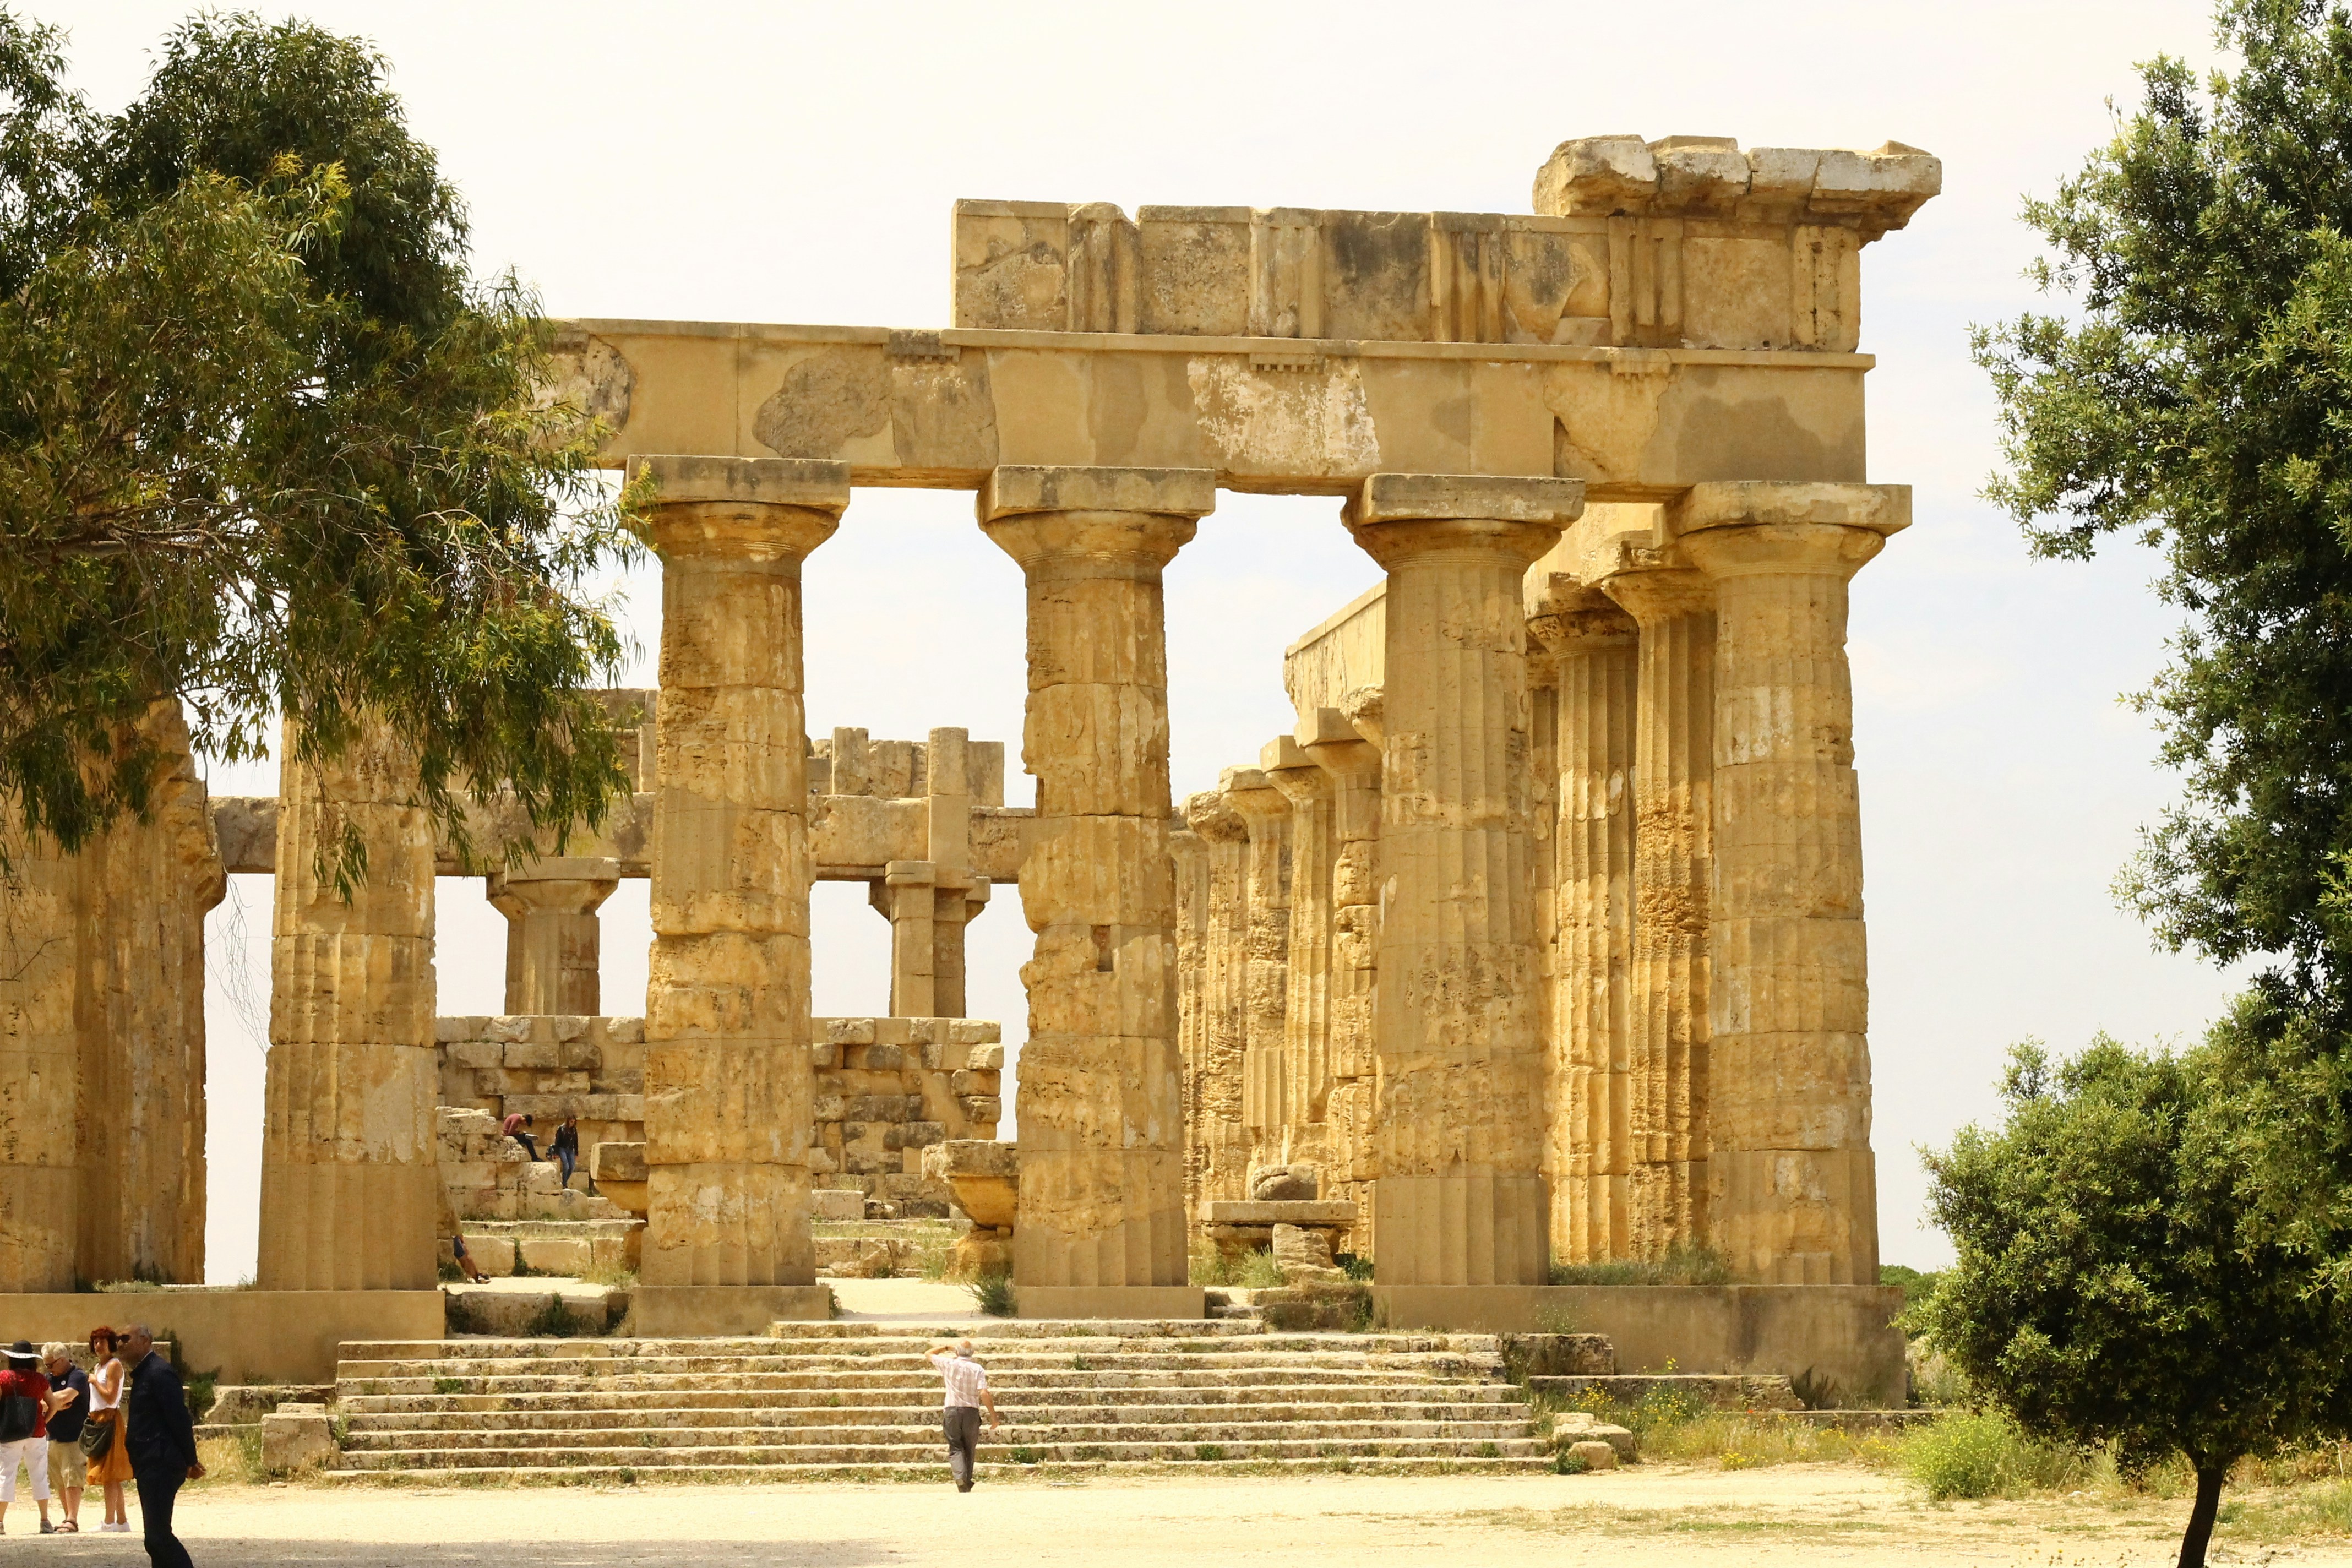 Tempio di Hera (Tempio E) at the ancient Greek archeological site of Selinunte on the isle of Sicily, Italy.